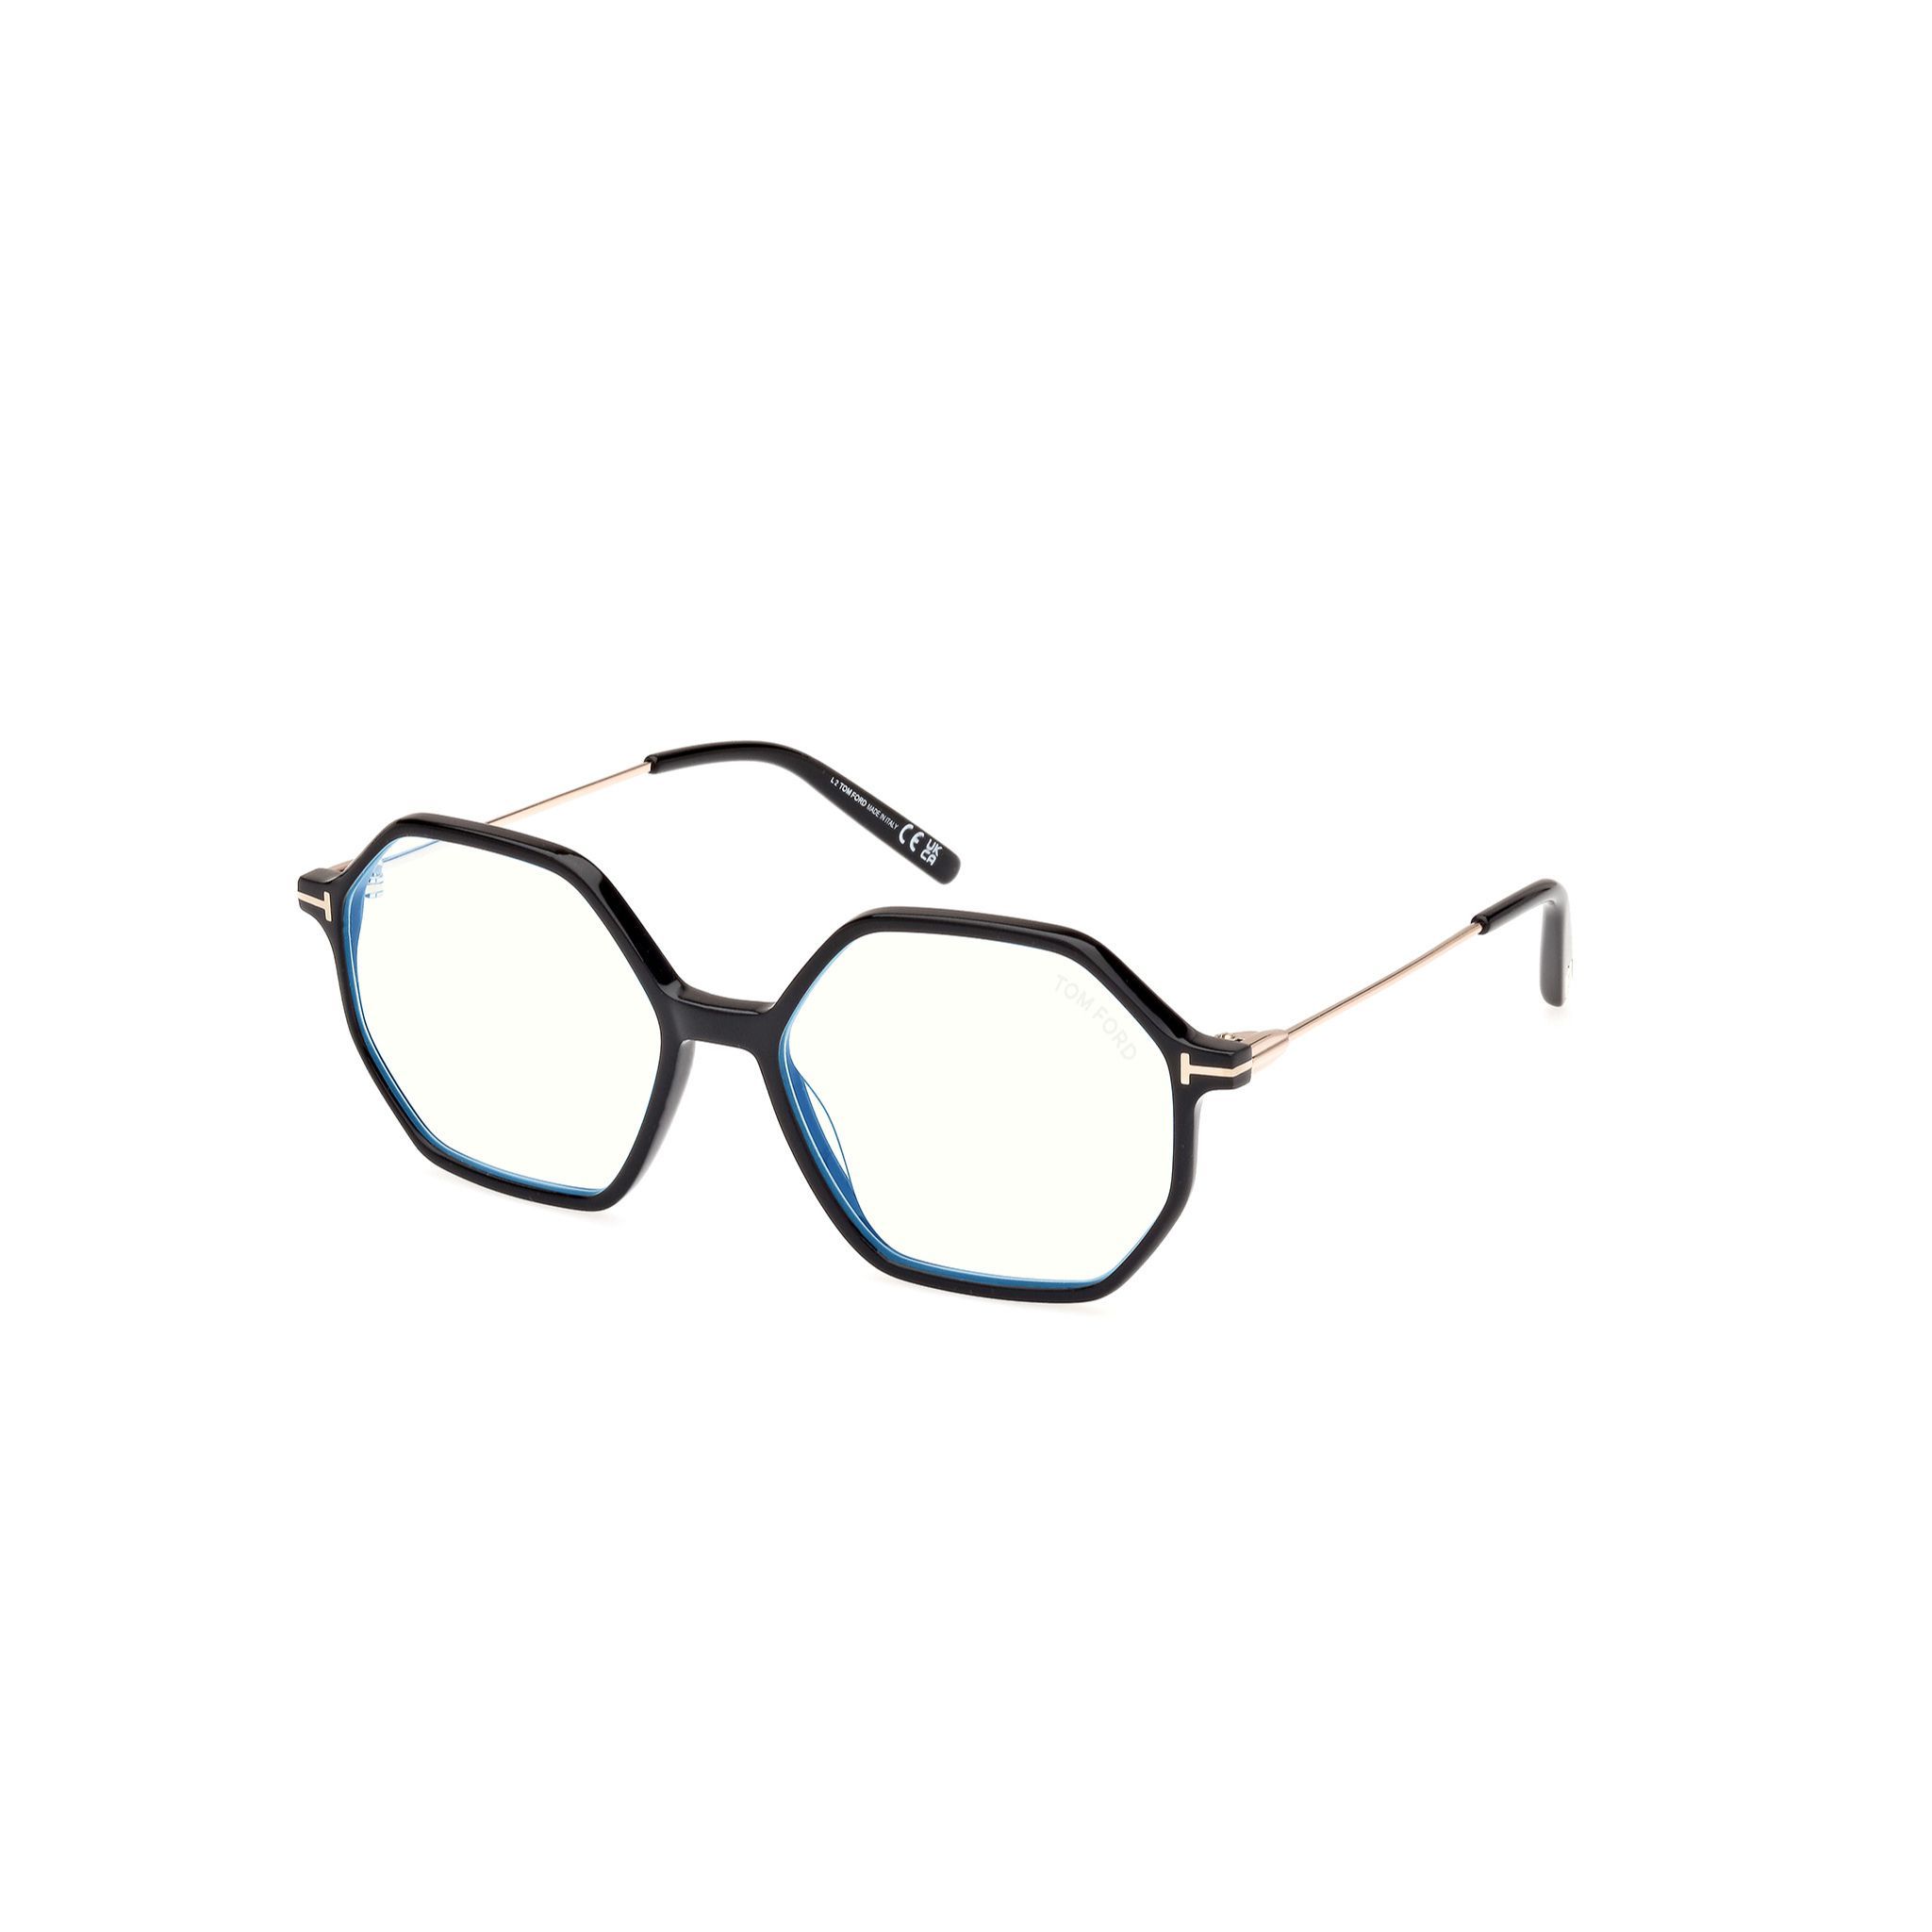 FT5952 Geometric Eyeglasses 001 - size 54